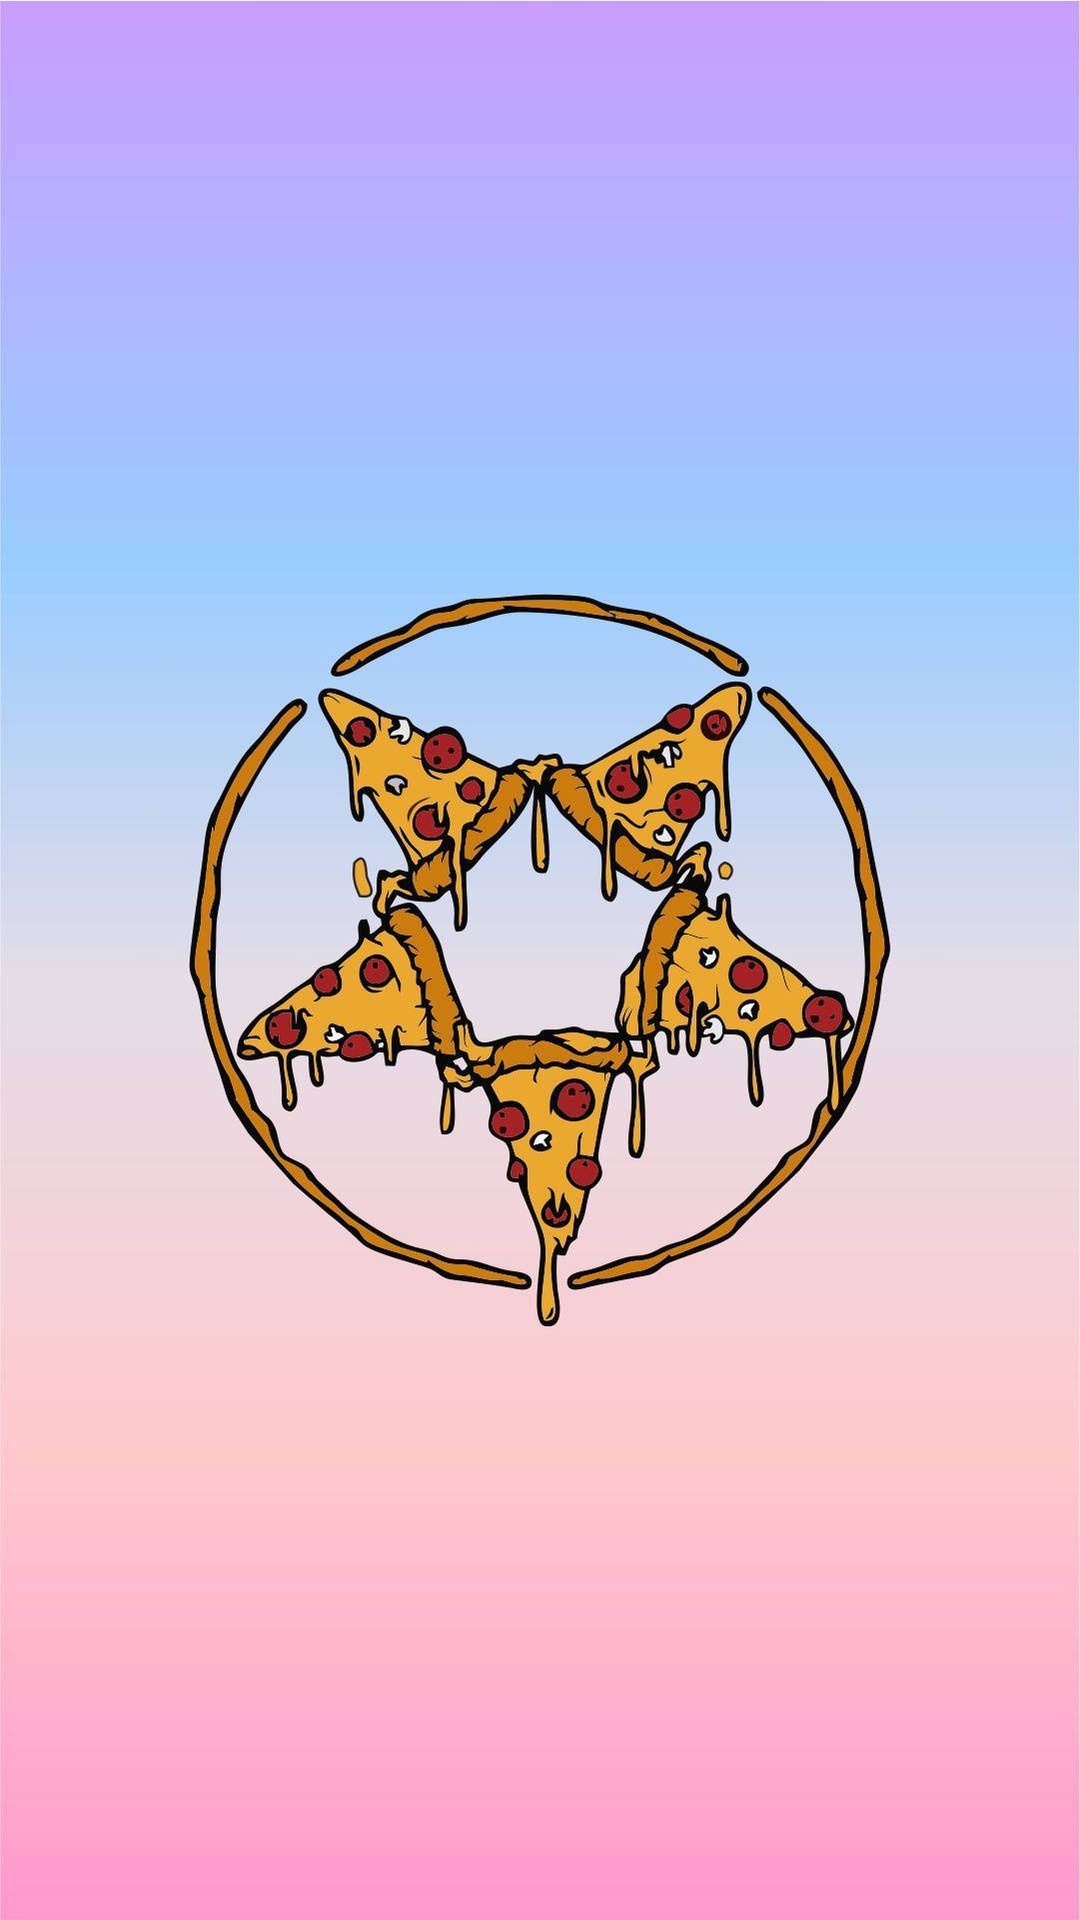 Caption: Unique Pepperoni Pizza Pentagram Design Background